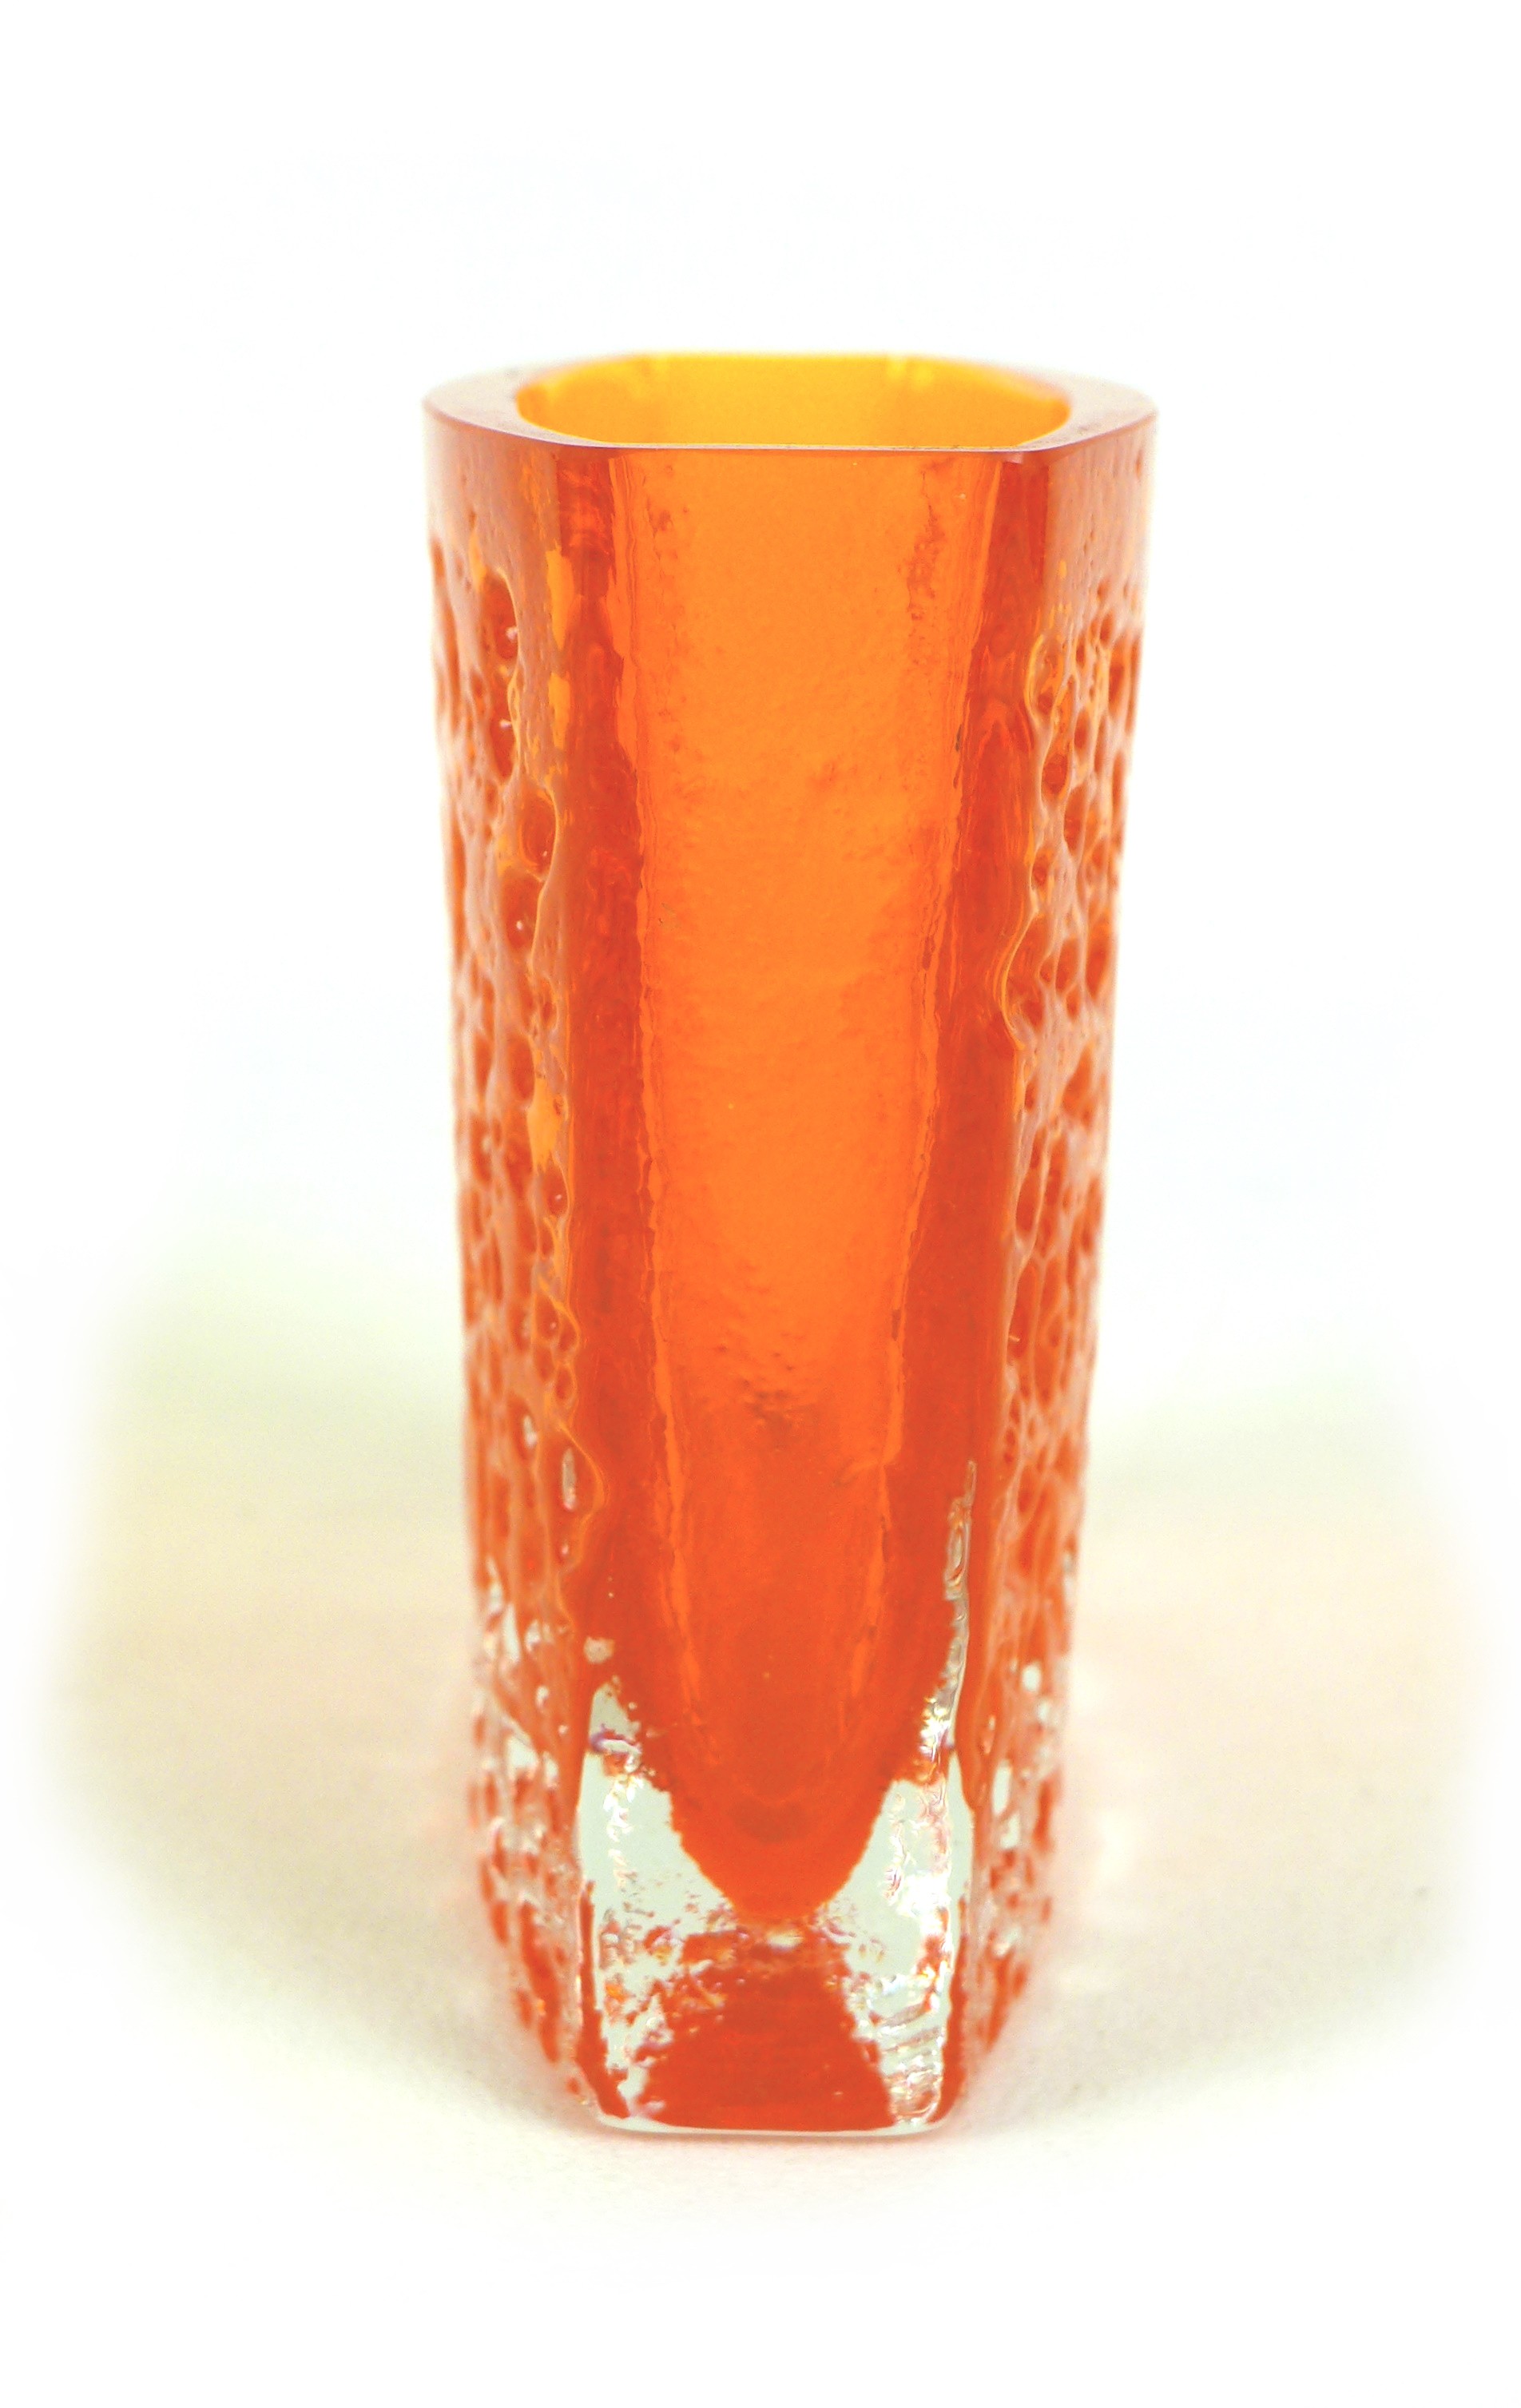 A 1960s Whitefriars Baxter tangerine Nailhead vase, '9685', 11.2cm high. - Image 3 of 6